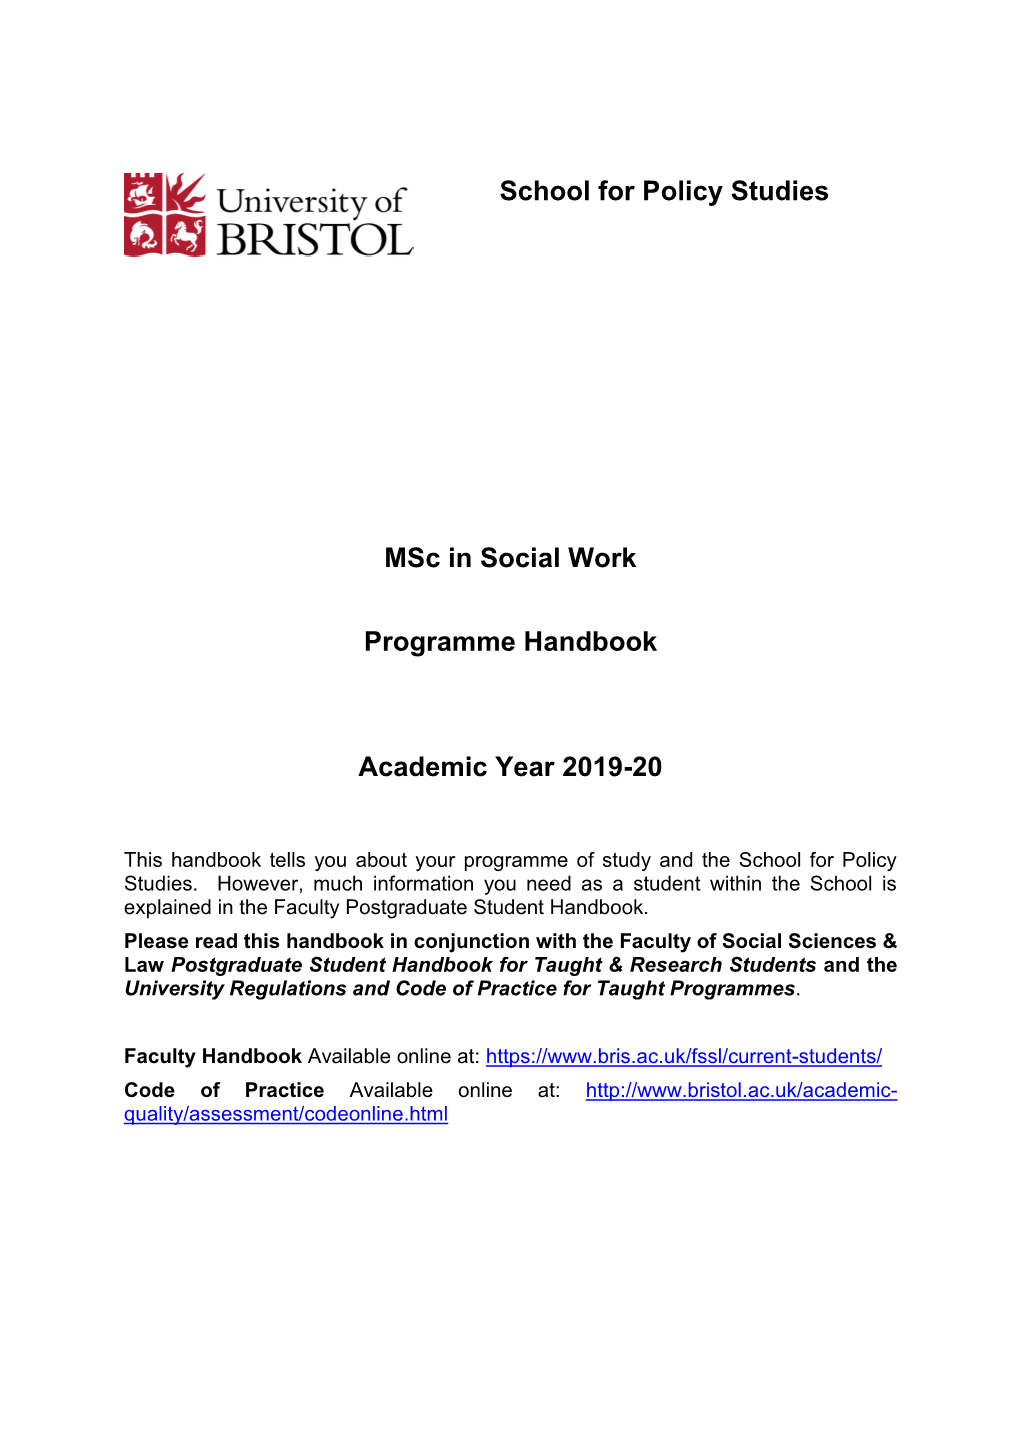 School for Policy Studies Msc in Social Work Programme Handbook